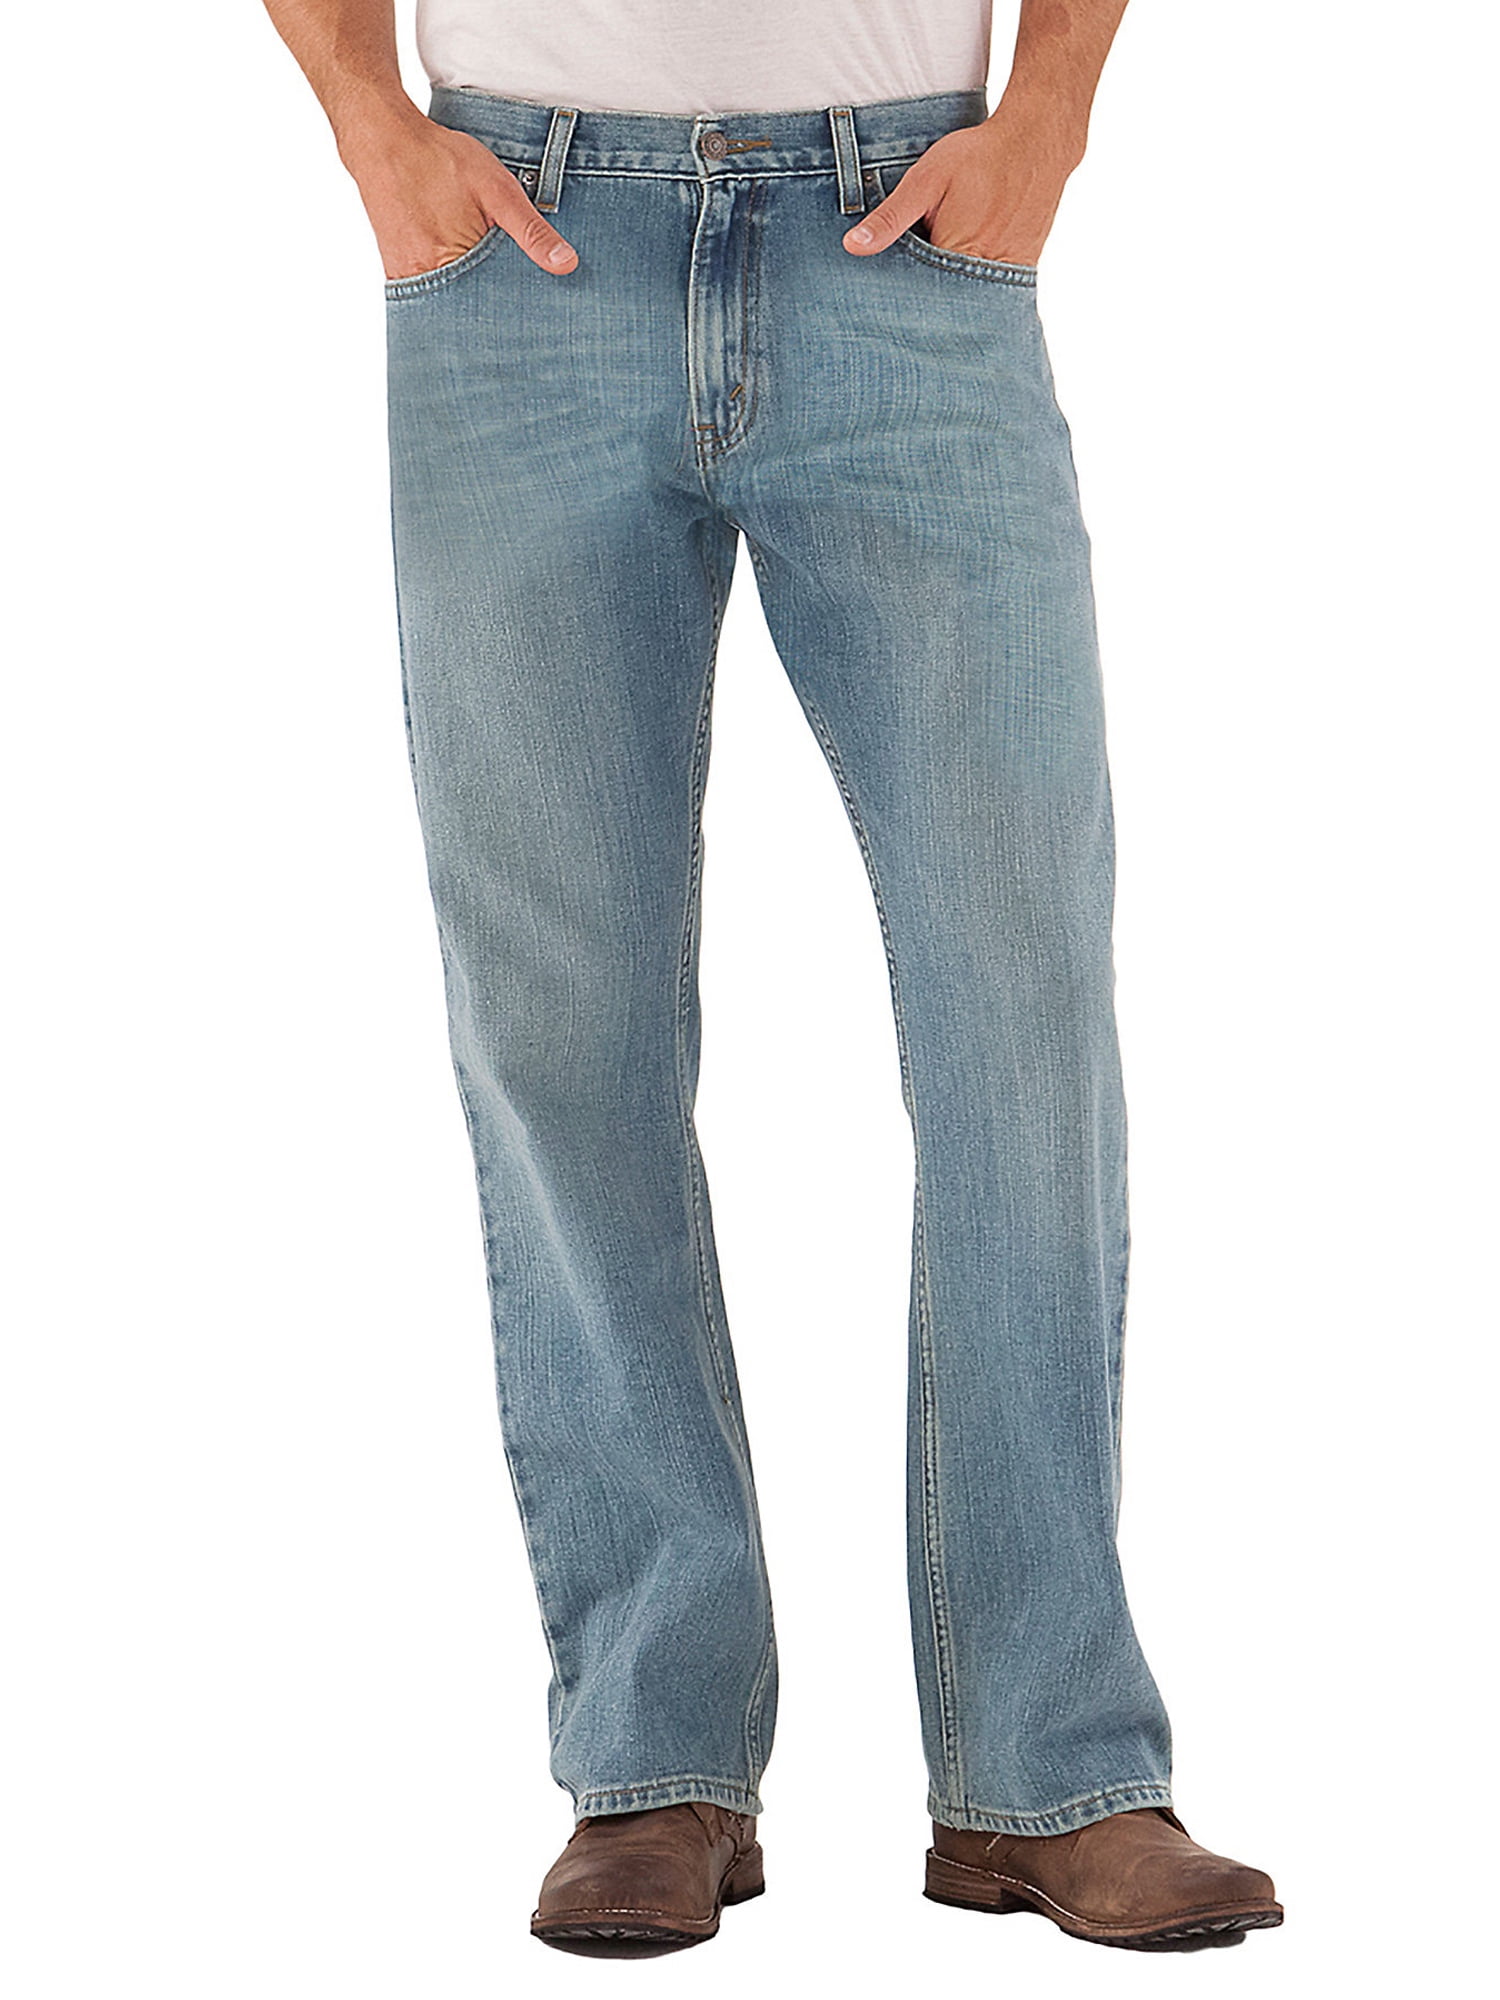 Silver Jeans Co. Men's Craig Easy Fit Bootcut Jeans, Waist Sizes